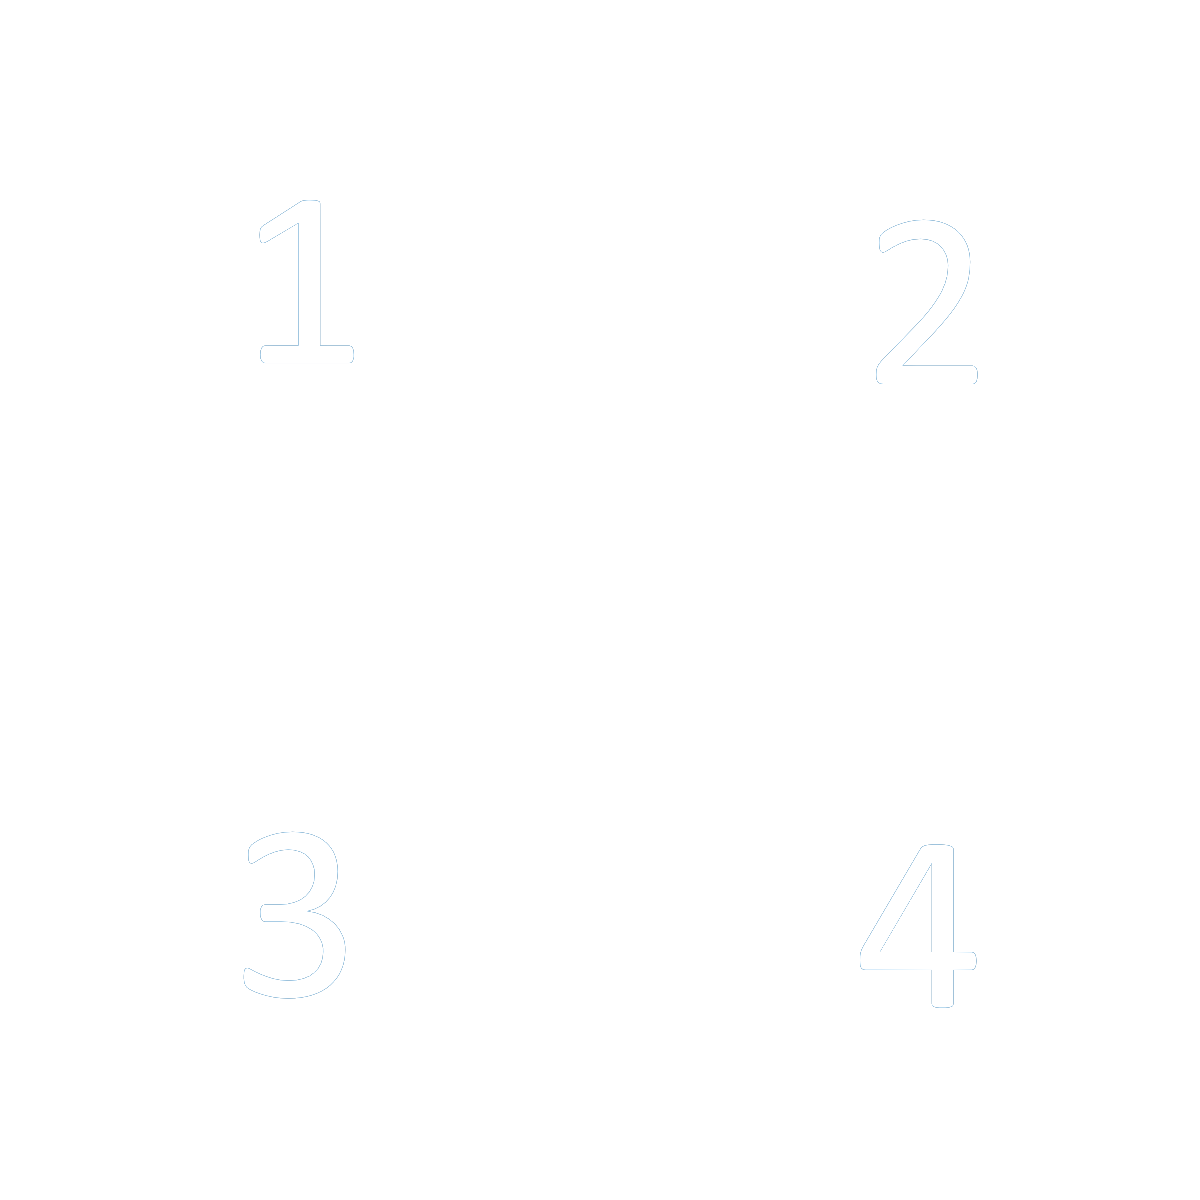 2x2 grid